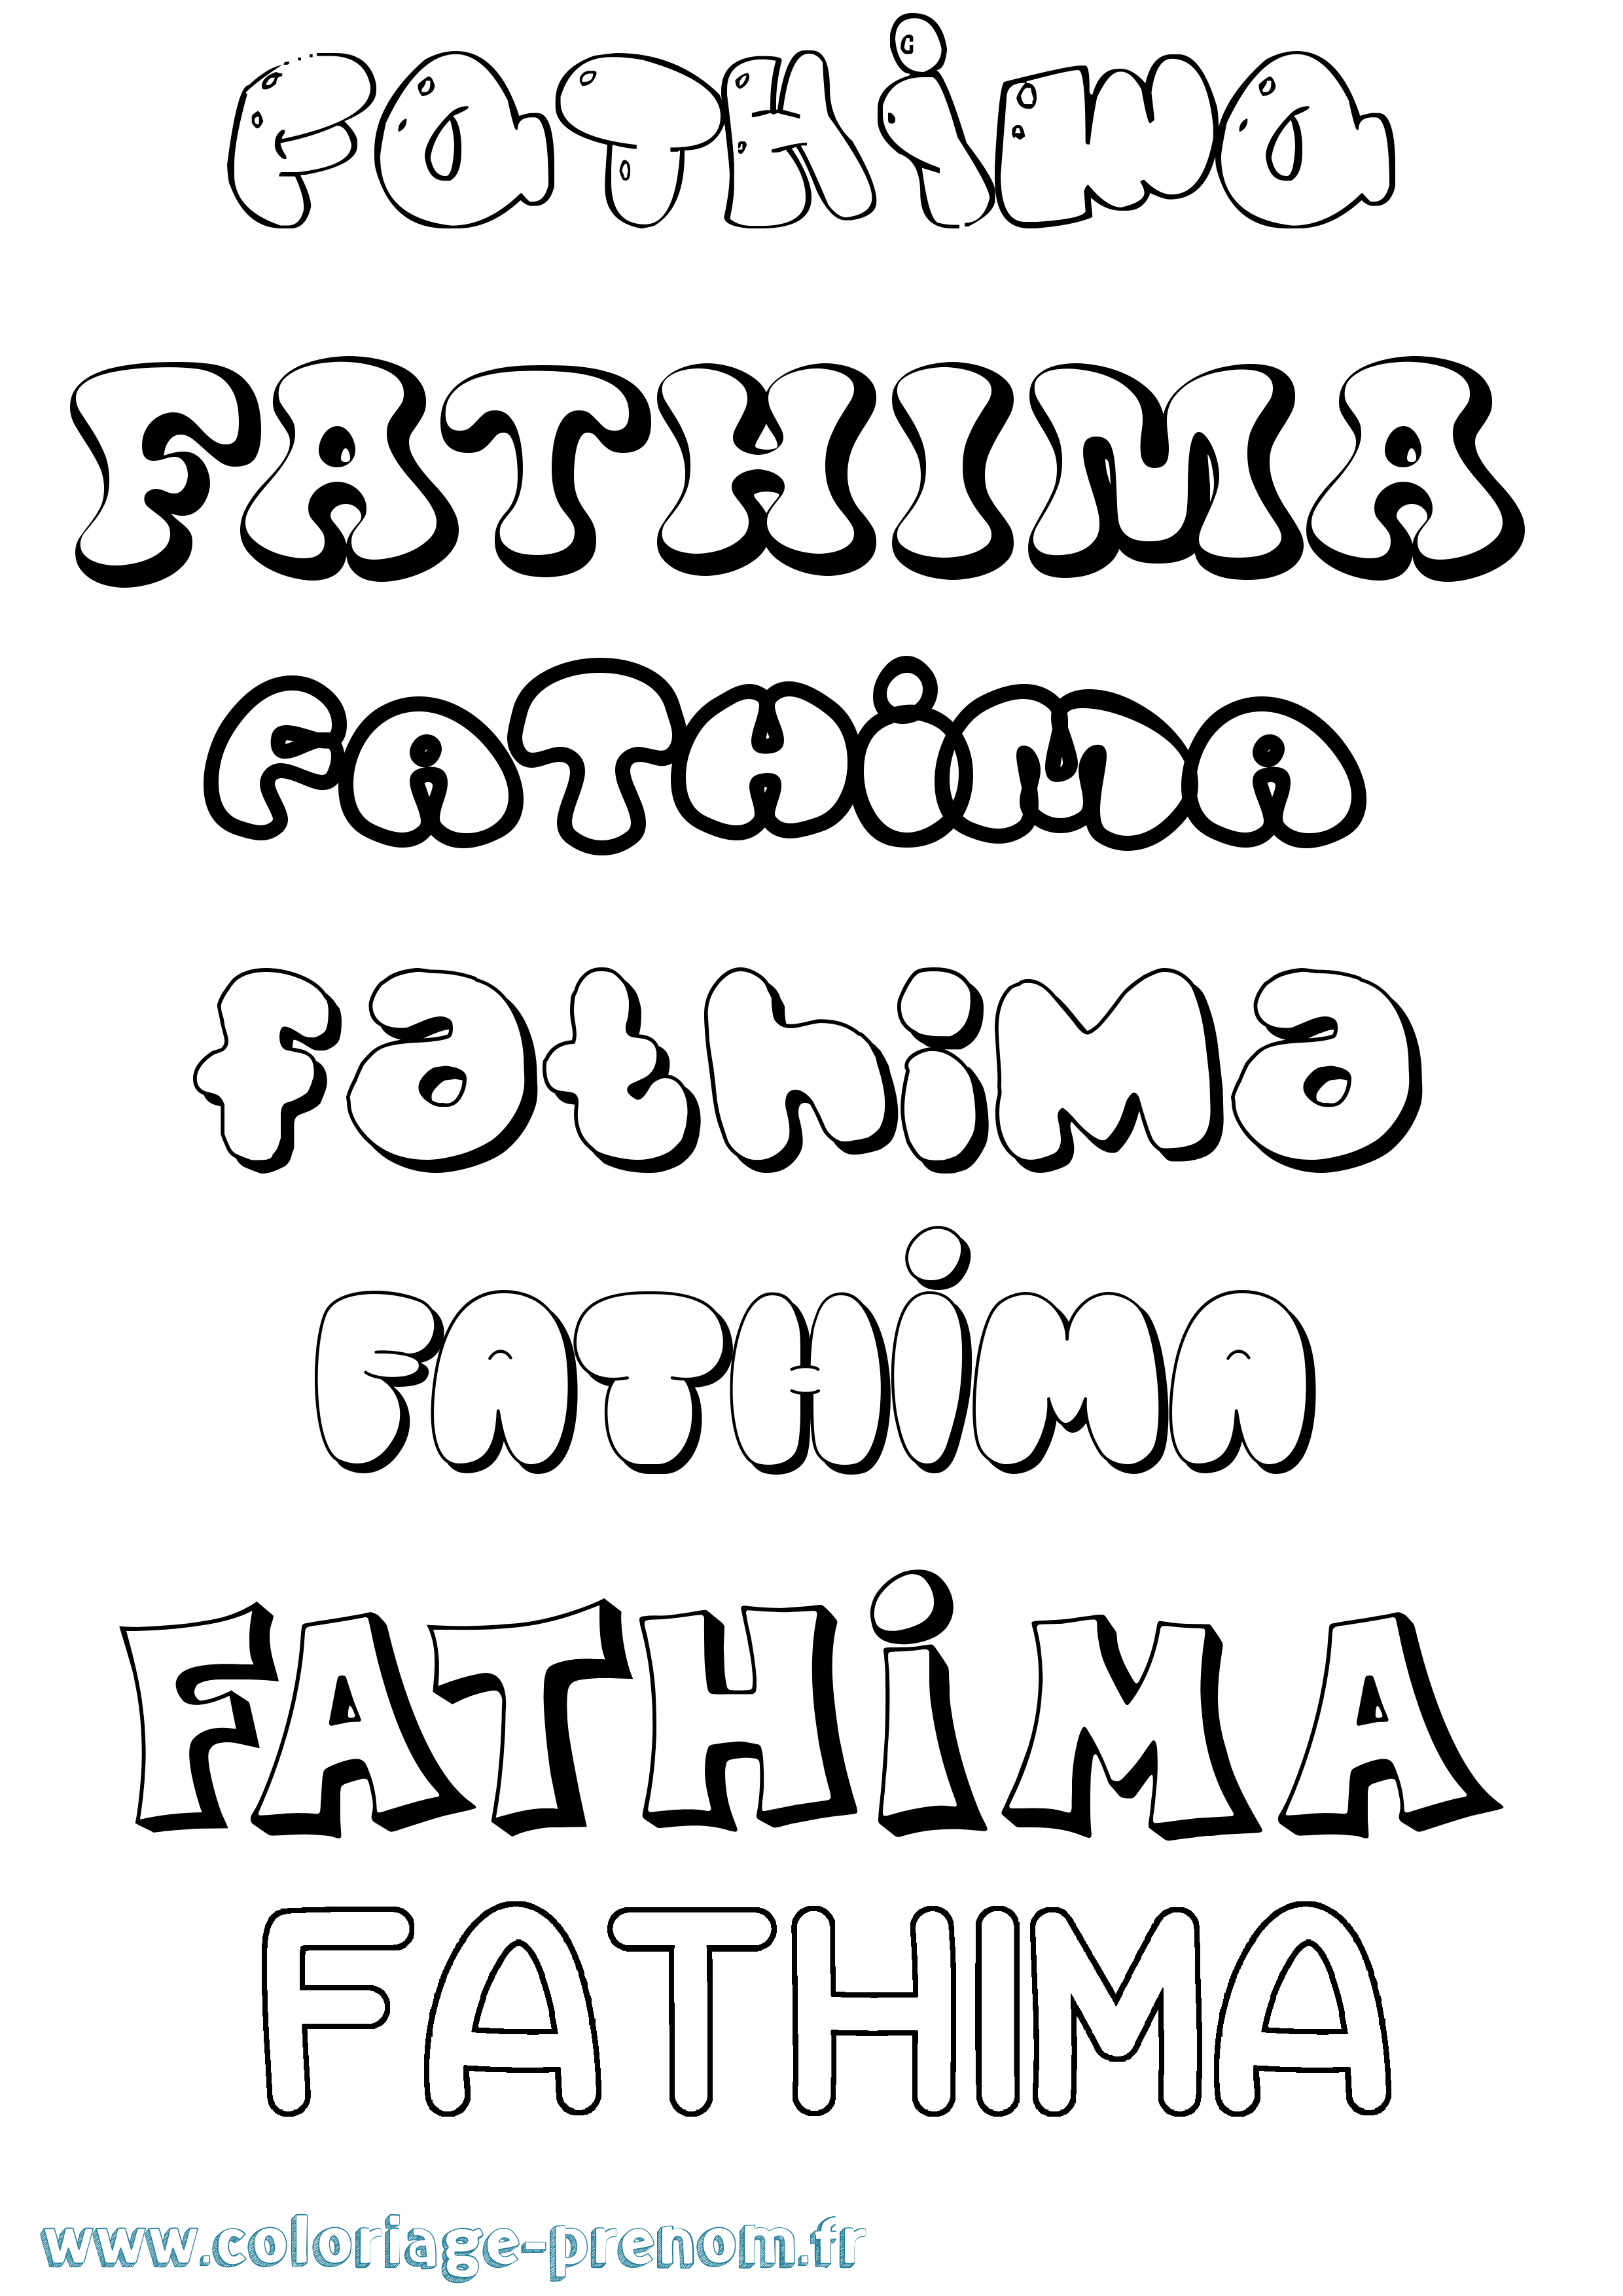 Coloriage prénom Fathima Bubble